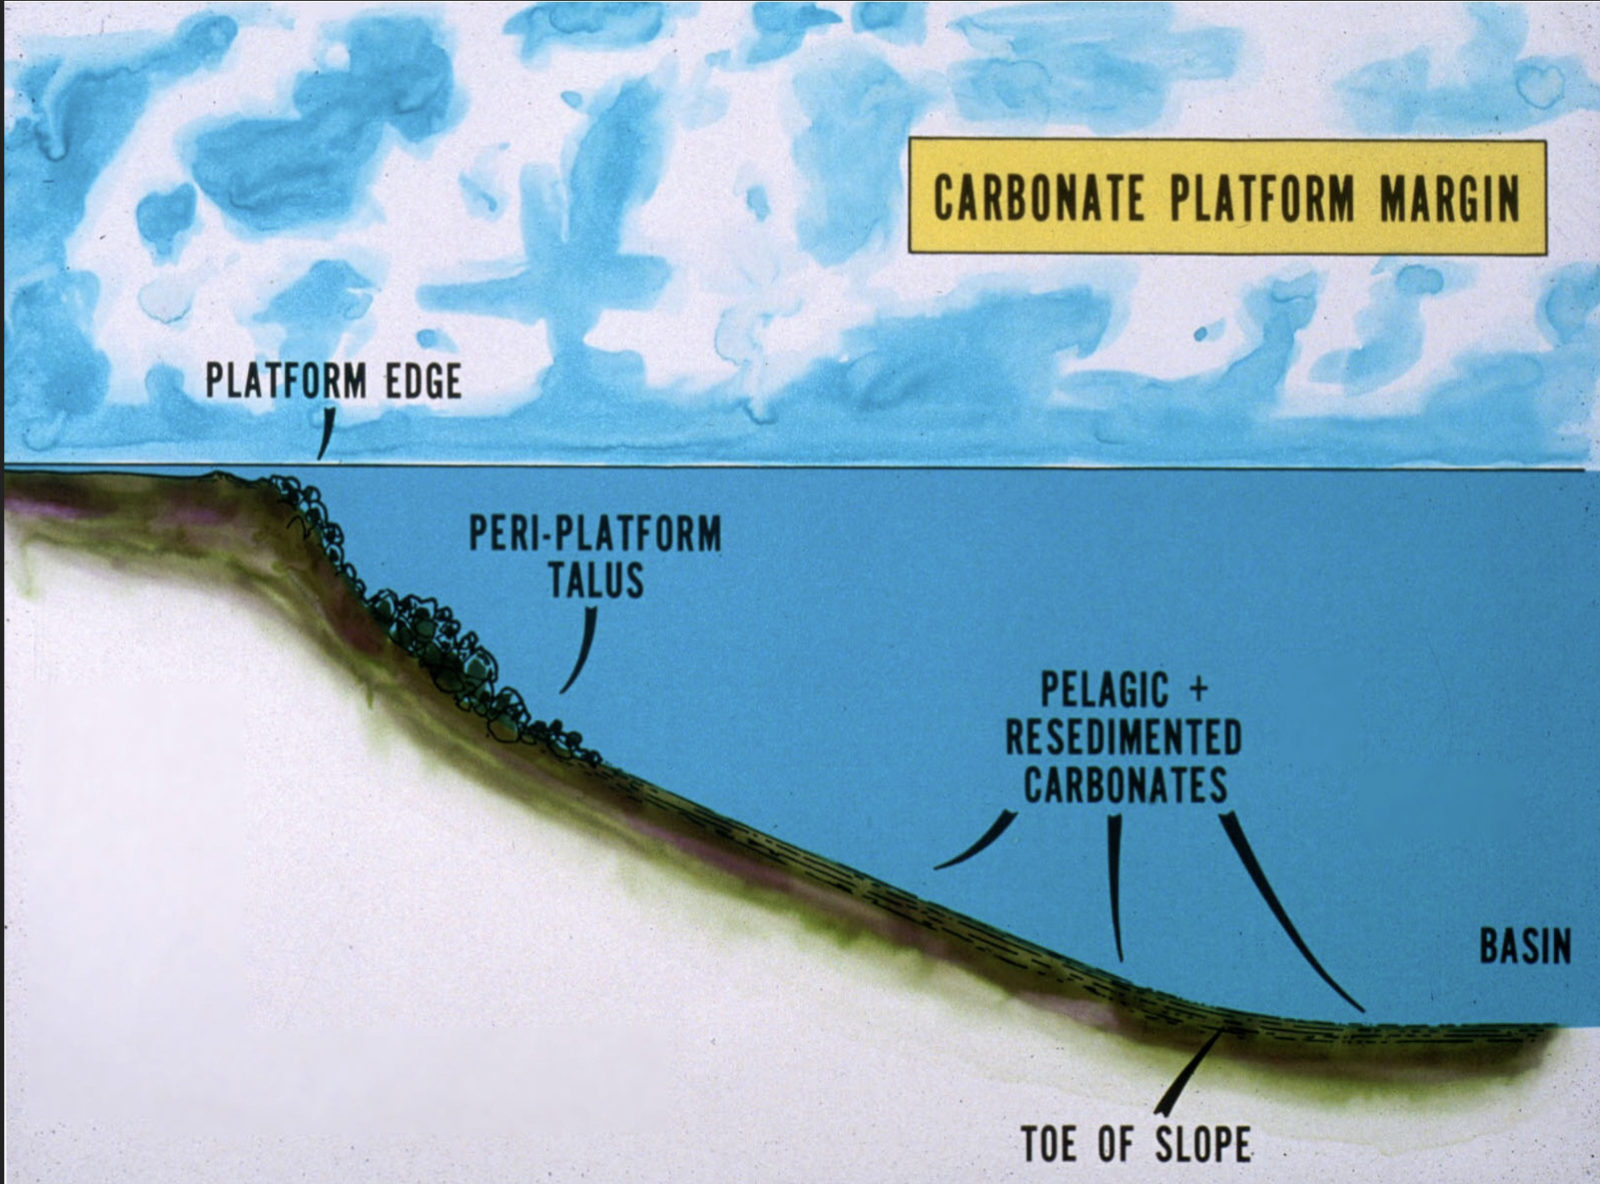 <ol><li><p>Platform edge</p></li><li><p>Peri-platform talus</p></li><li><p>Pelagic and re-sedimented carbonates (extending to toe of slope)</p></li><li><p>Basin</p></li></ol>